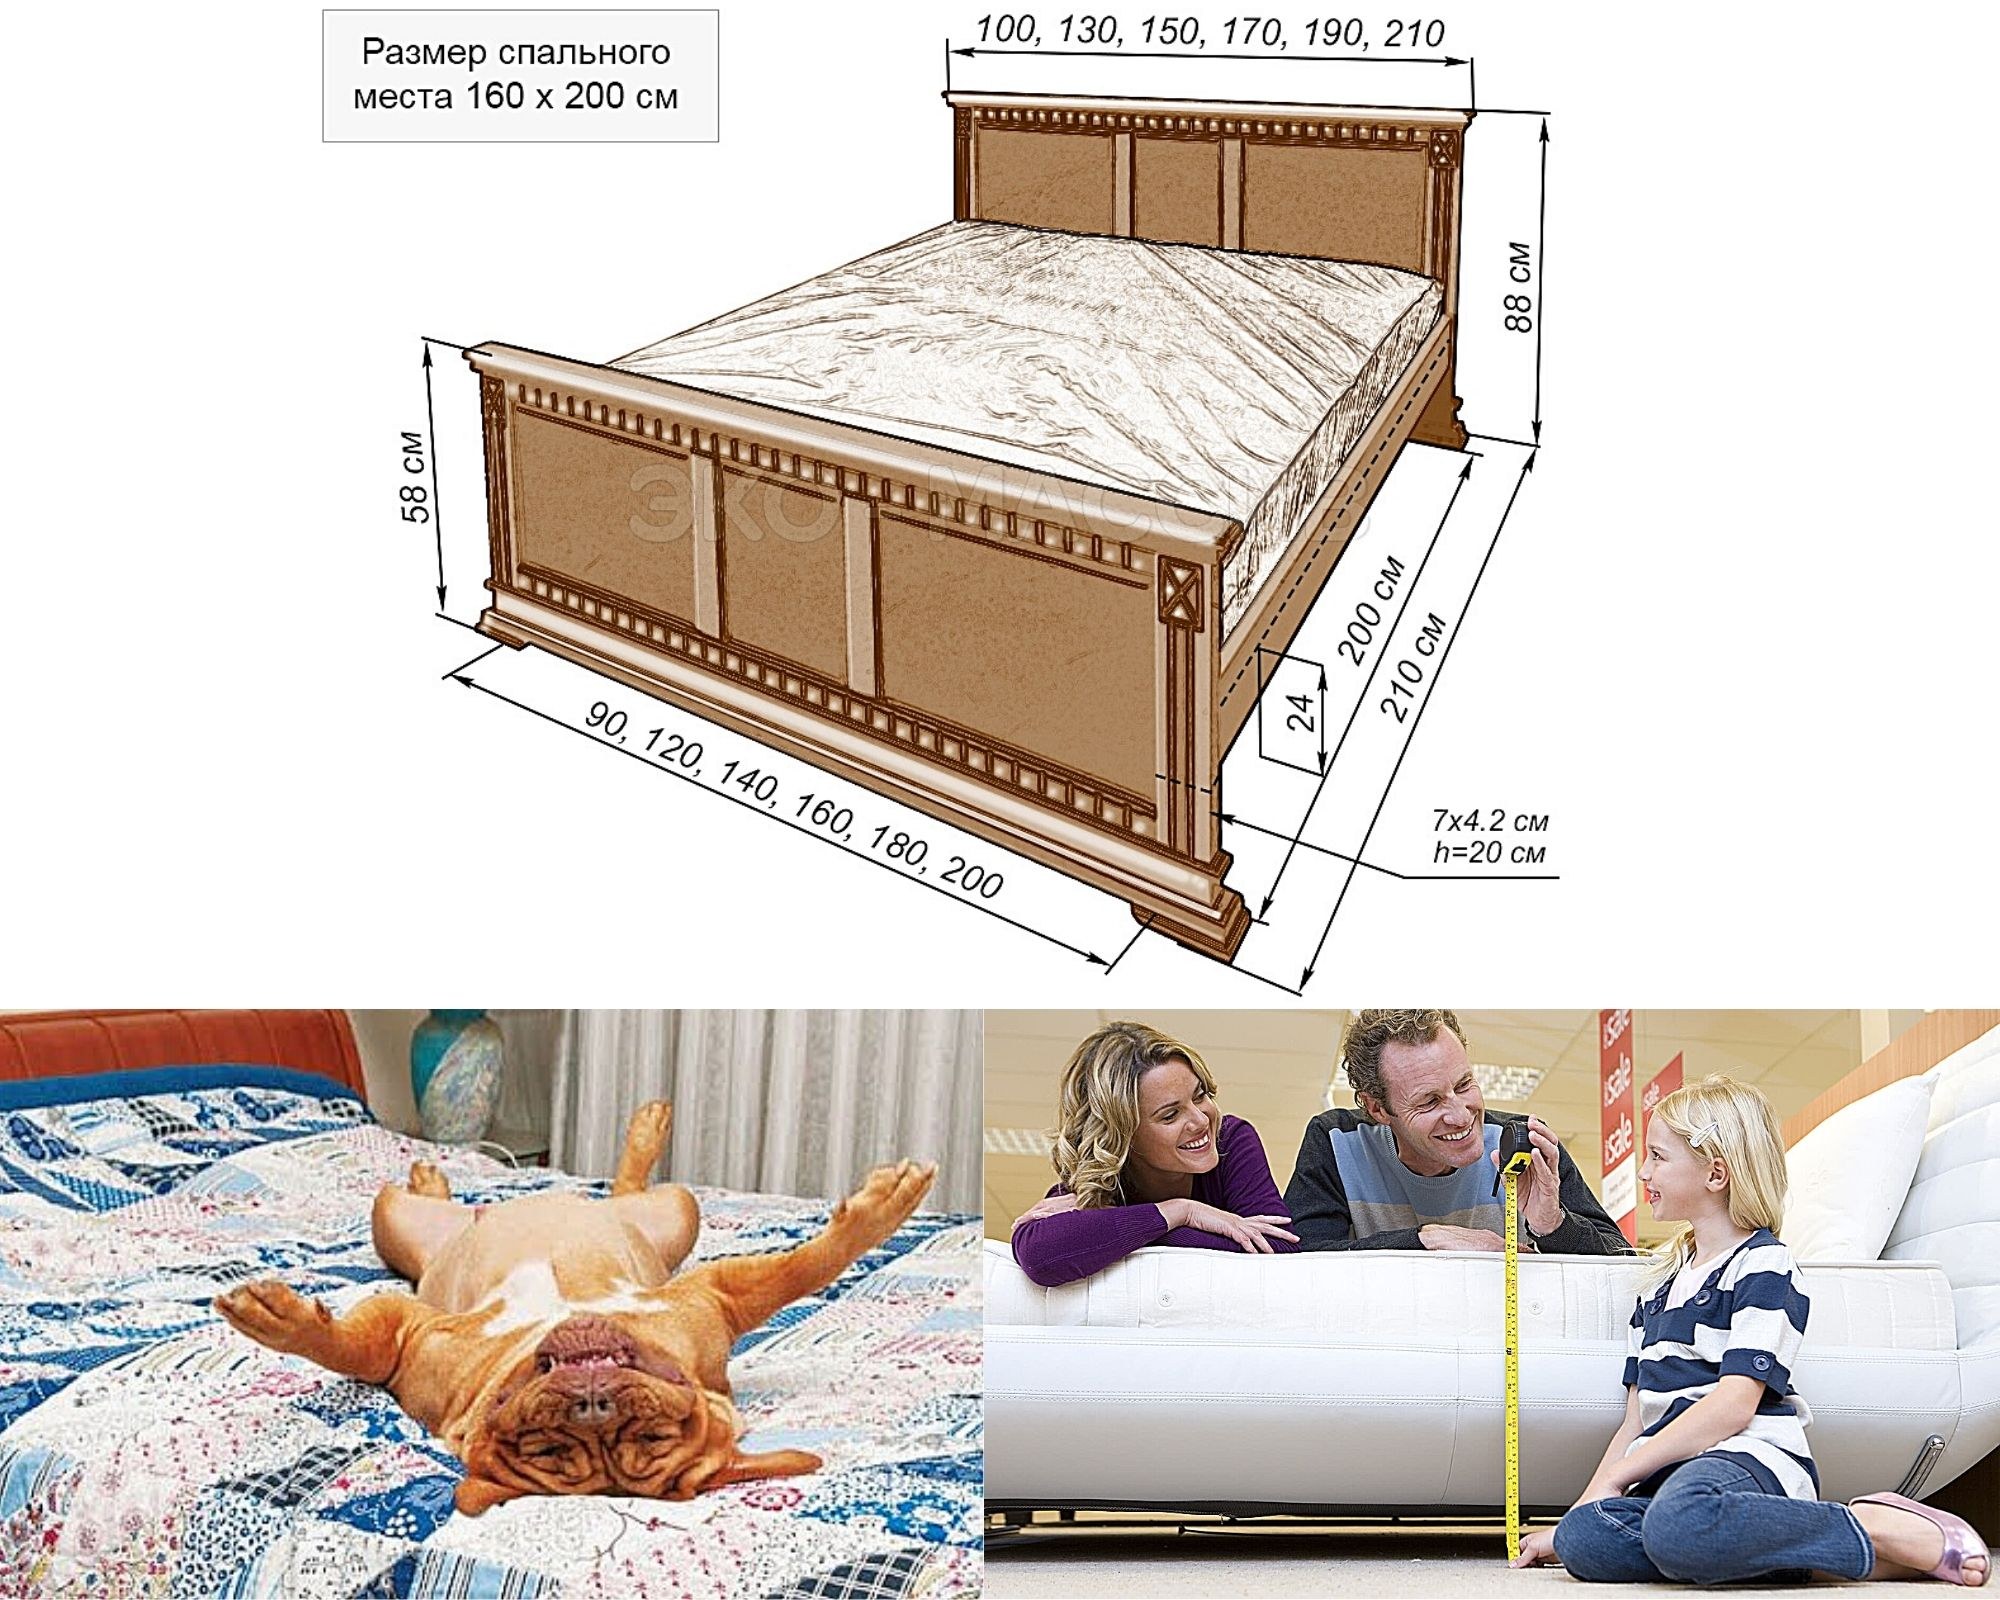 Кровать полуторка размер. Стандарт кровати двухспалки размер ширина. Габариты двуспальной кровати стандарт и евро. Кровать полуторка Размеры стандарт. Ширина двуспальной кровати.